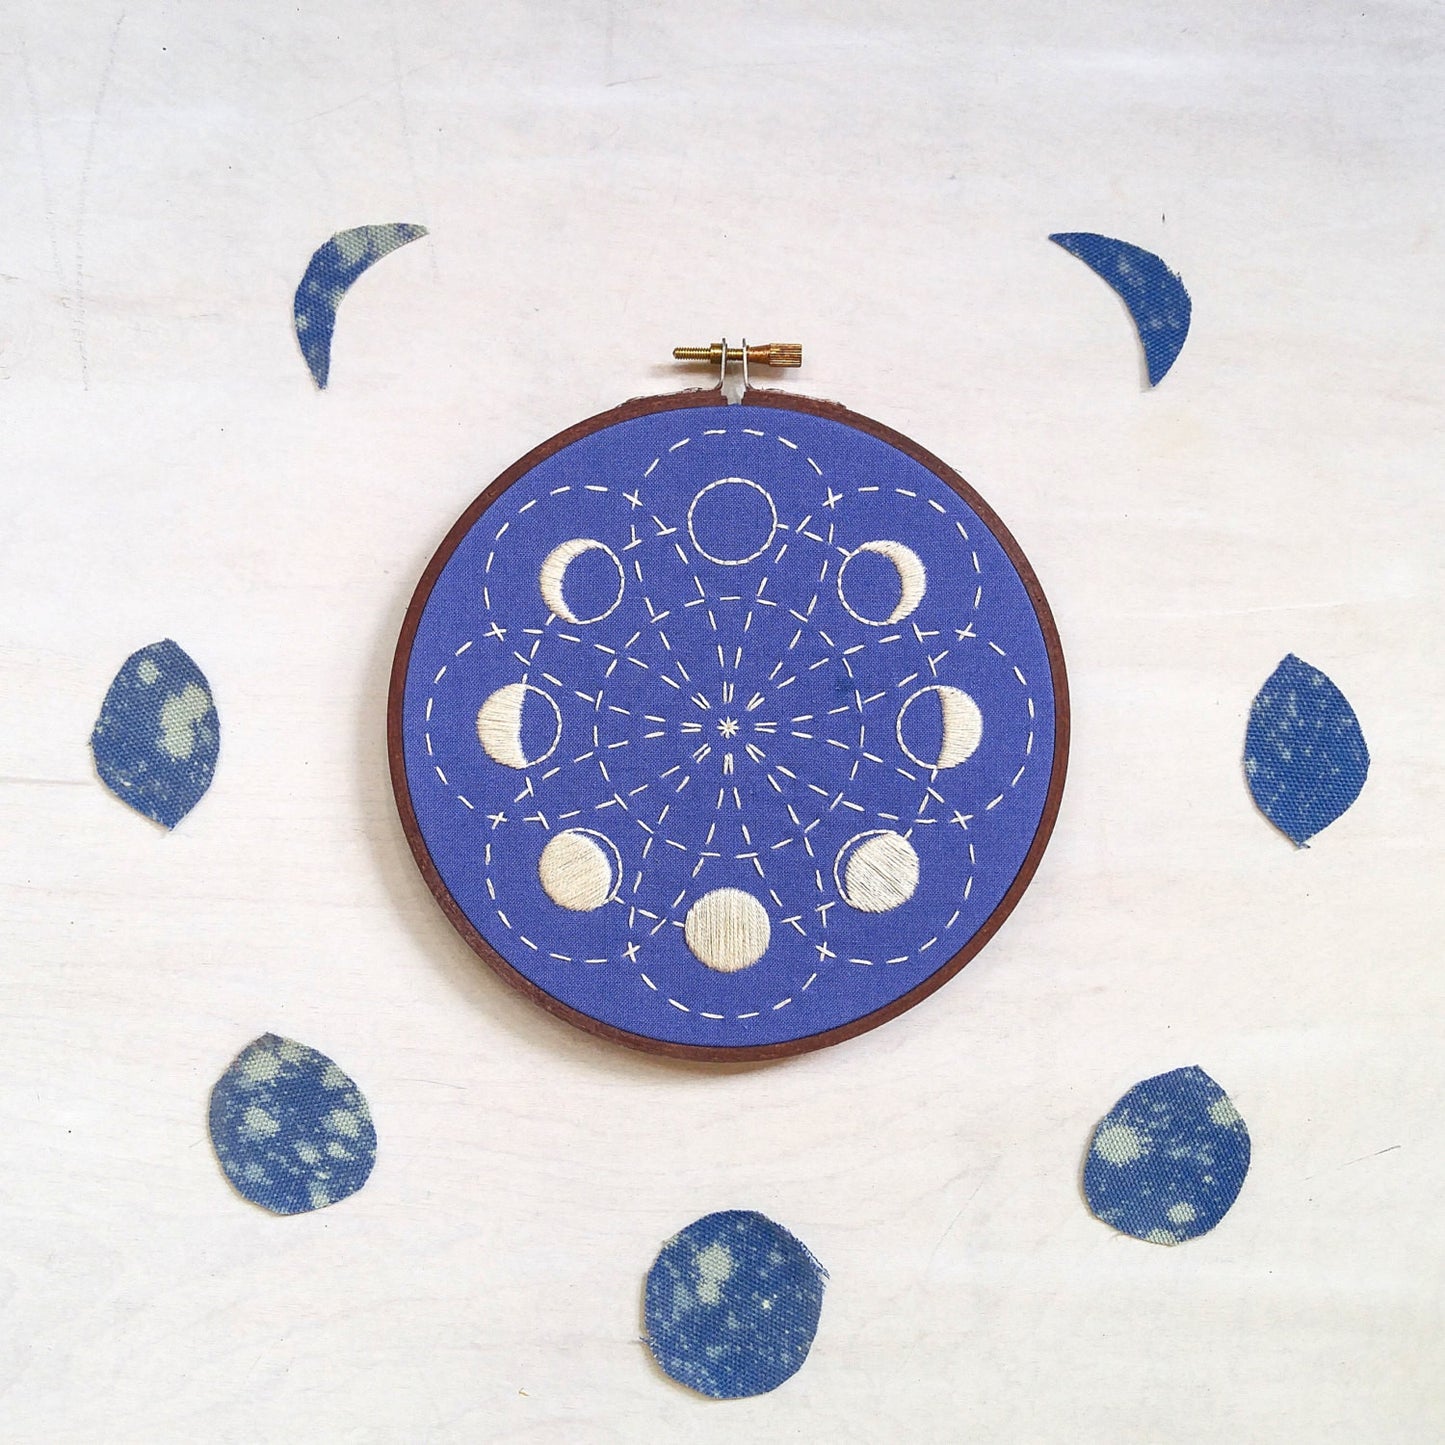 Lunar Blossom - Cozyblue Handmade Embroidery Kit